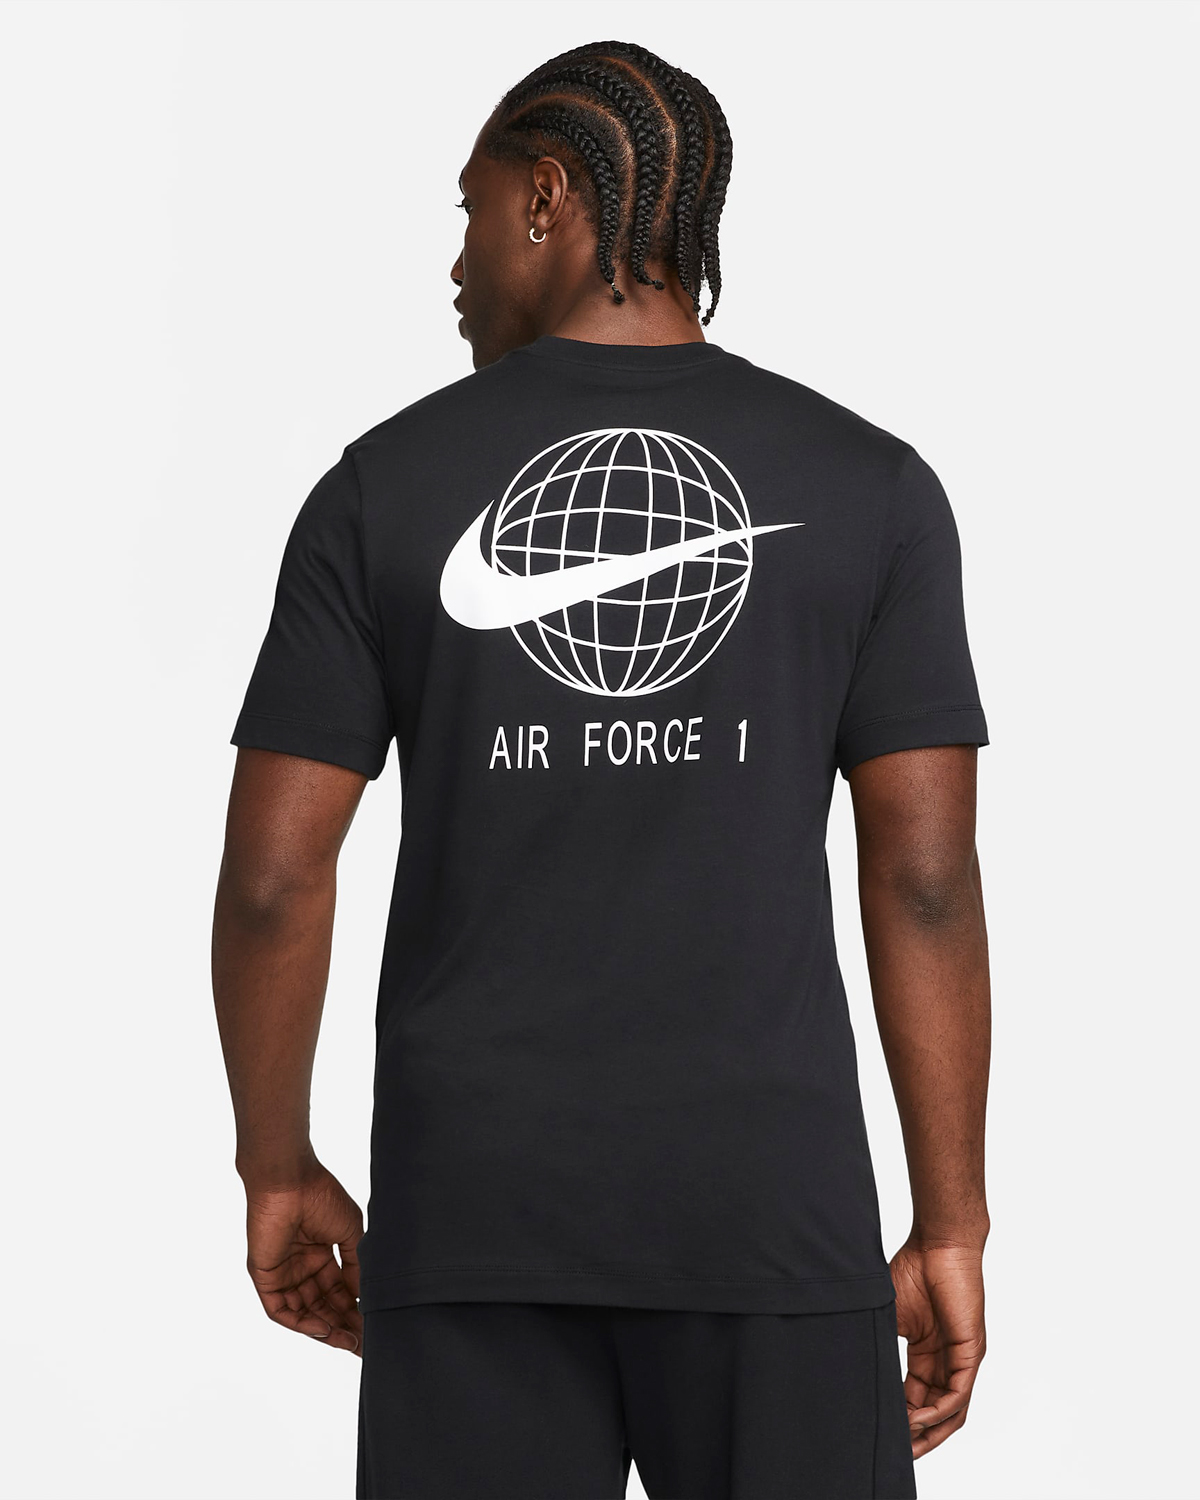 Nike-Air-Force-1-AF1-40th-Anniversary-T-Shirt-Black-White-Blue-2